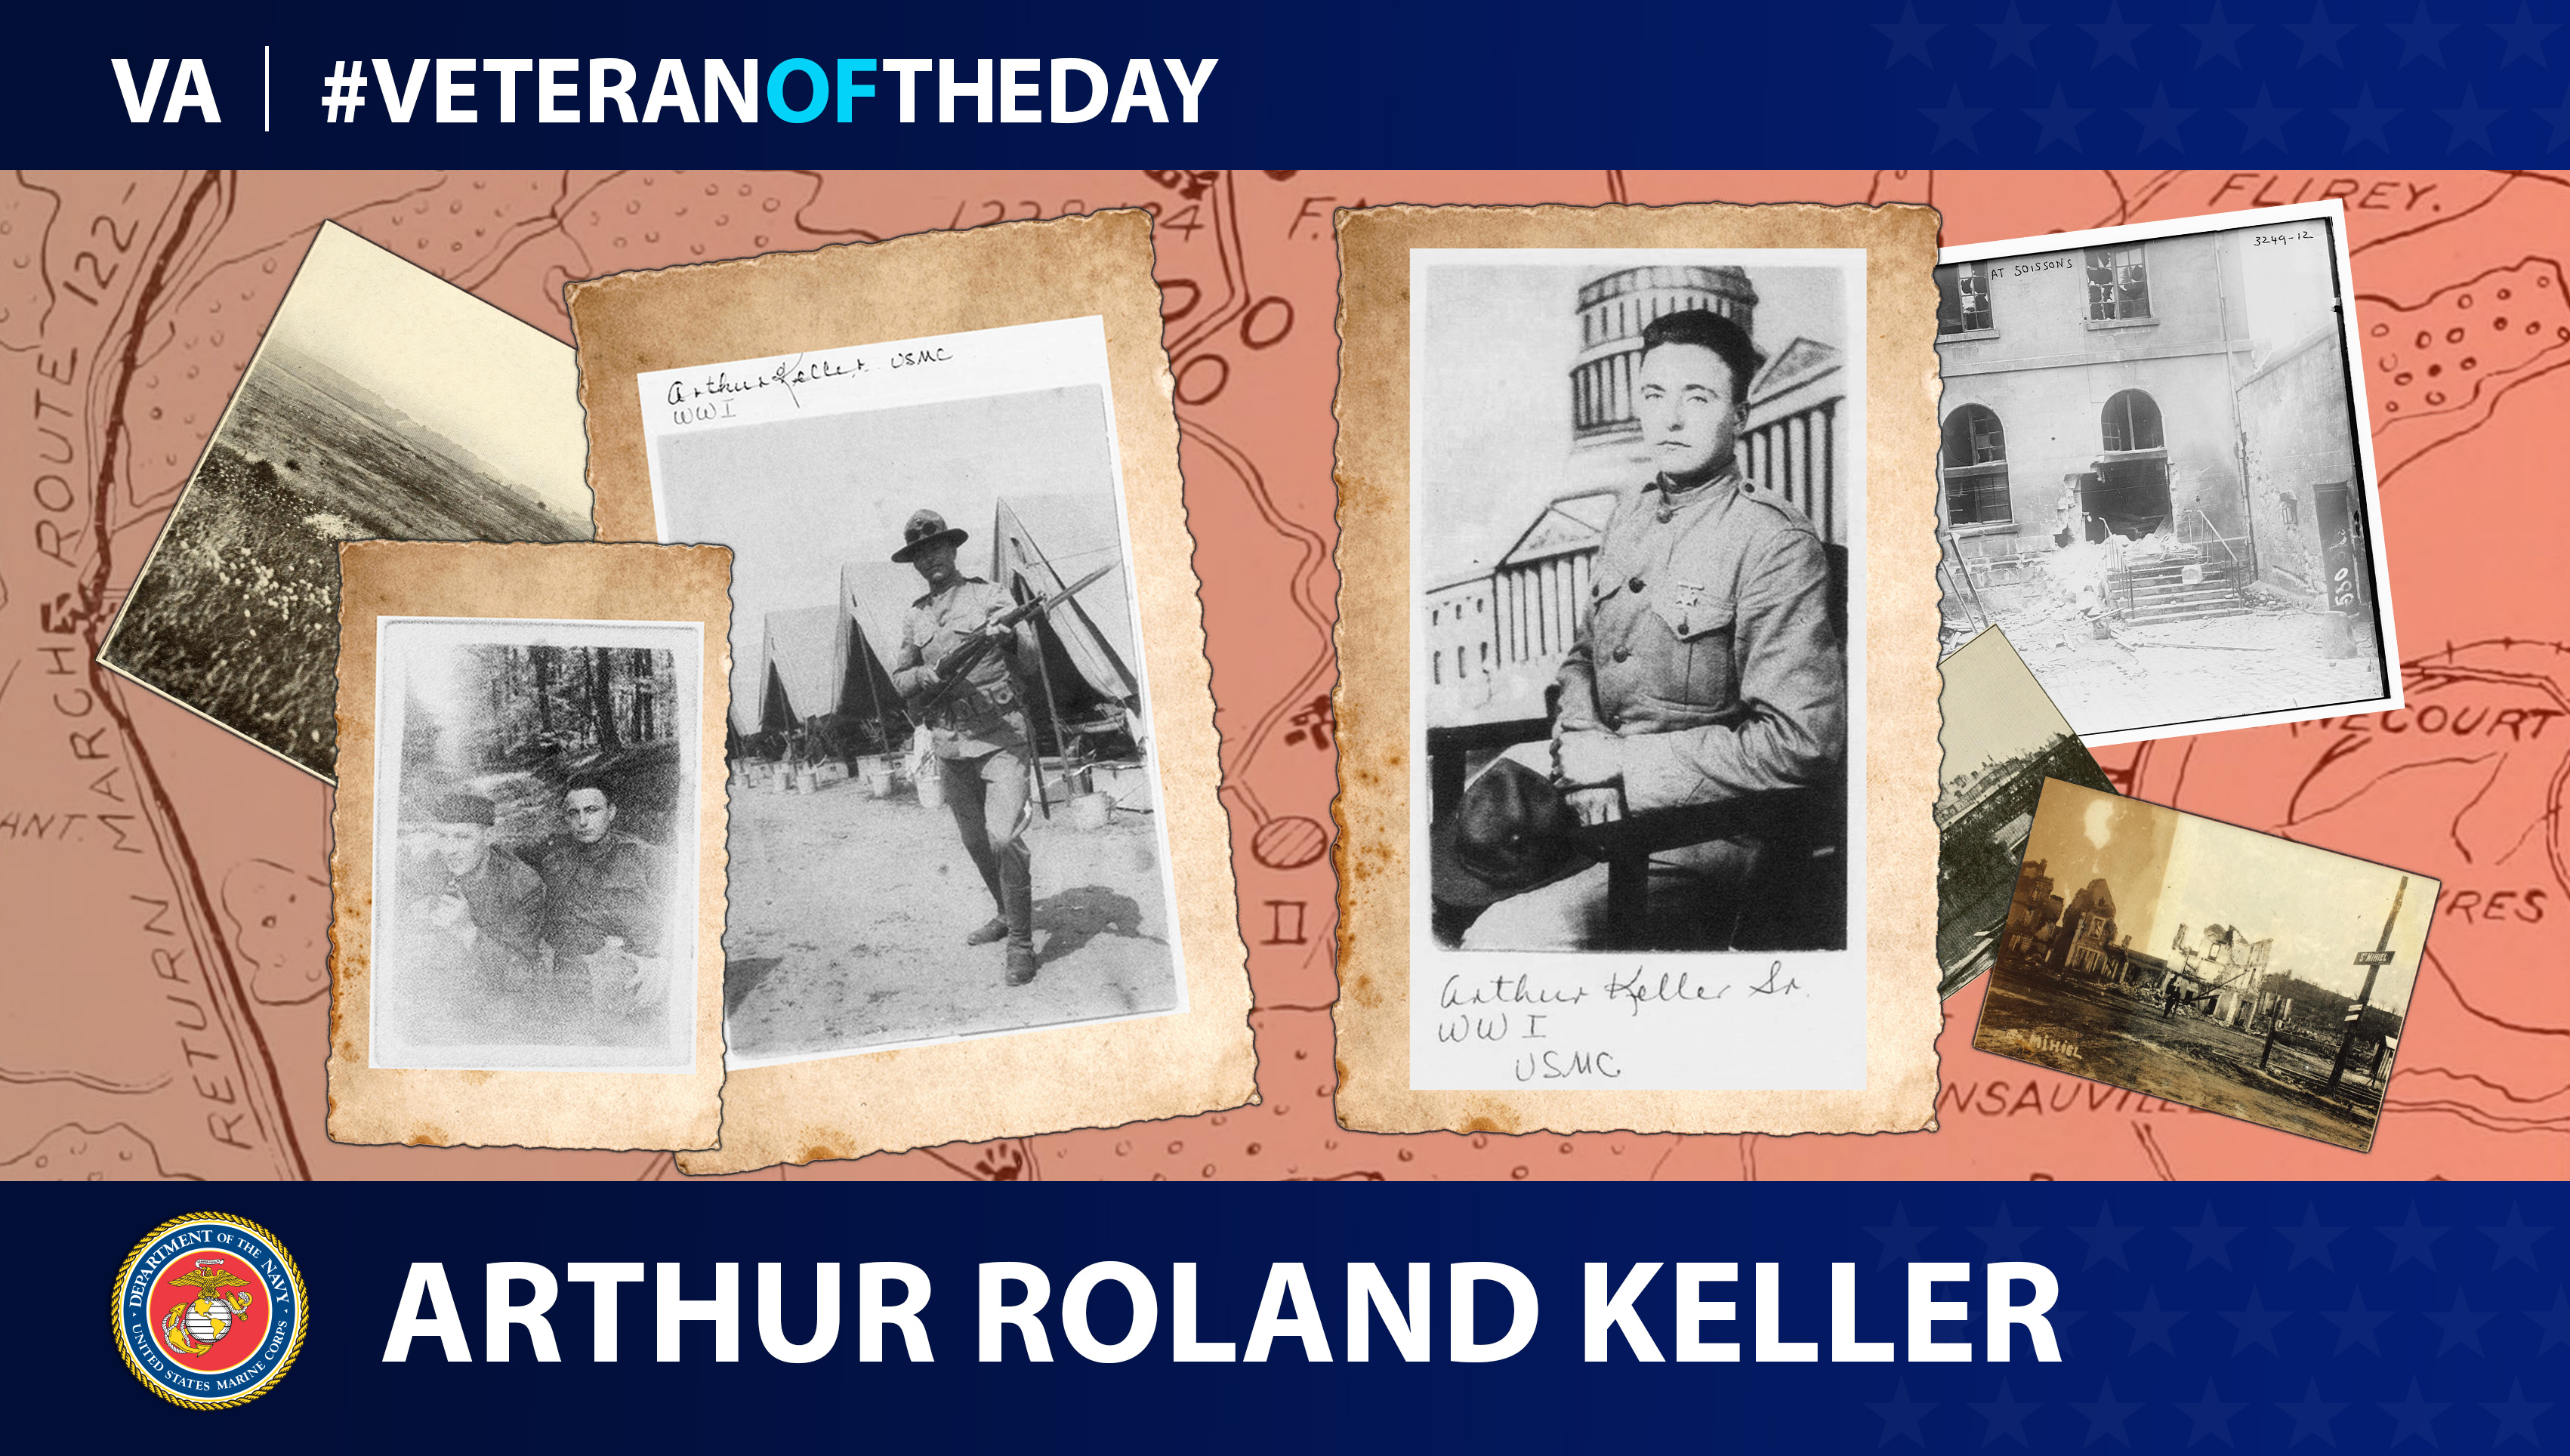 Marine Veteran Arthur Roland Keller is today's #VeteranOfTheDay.